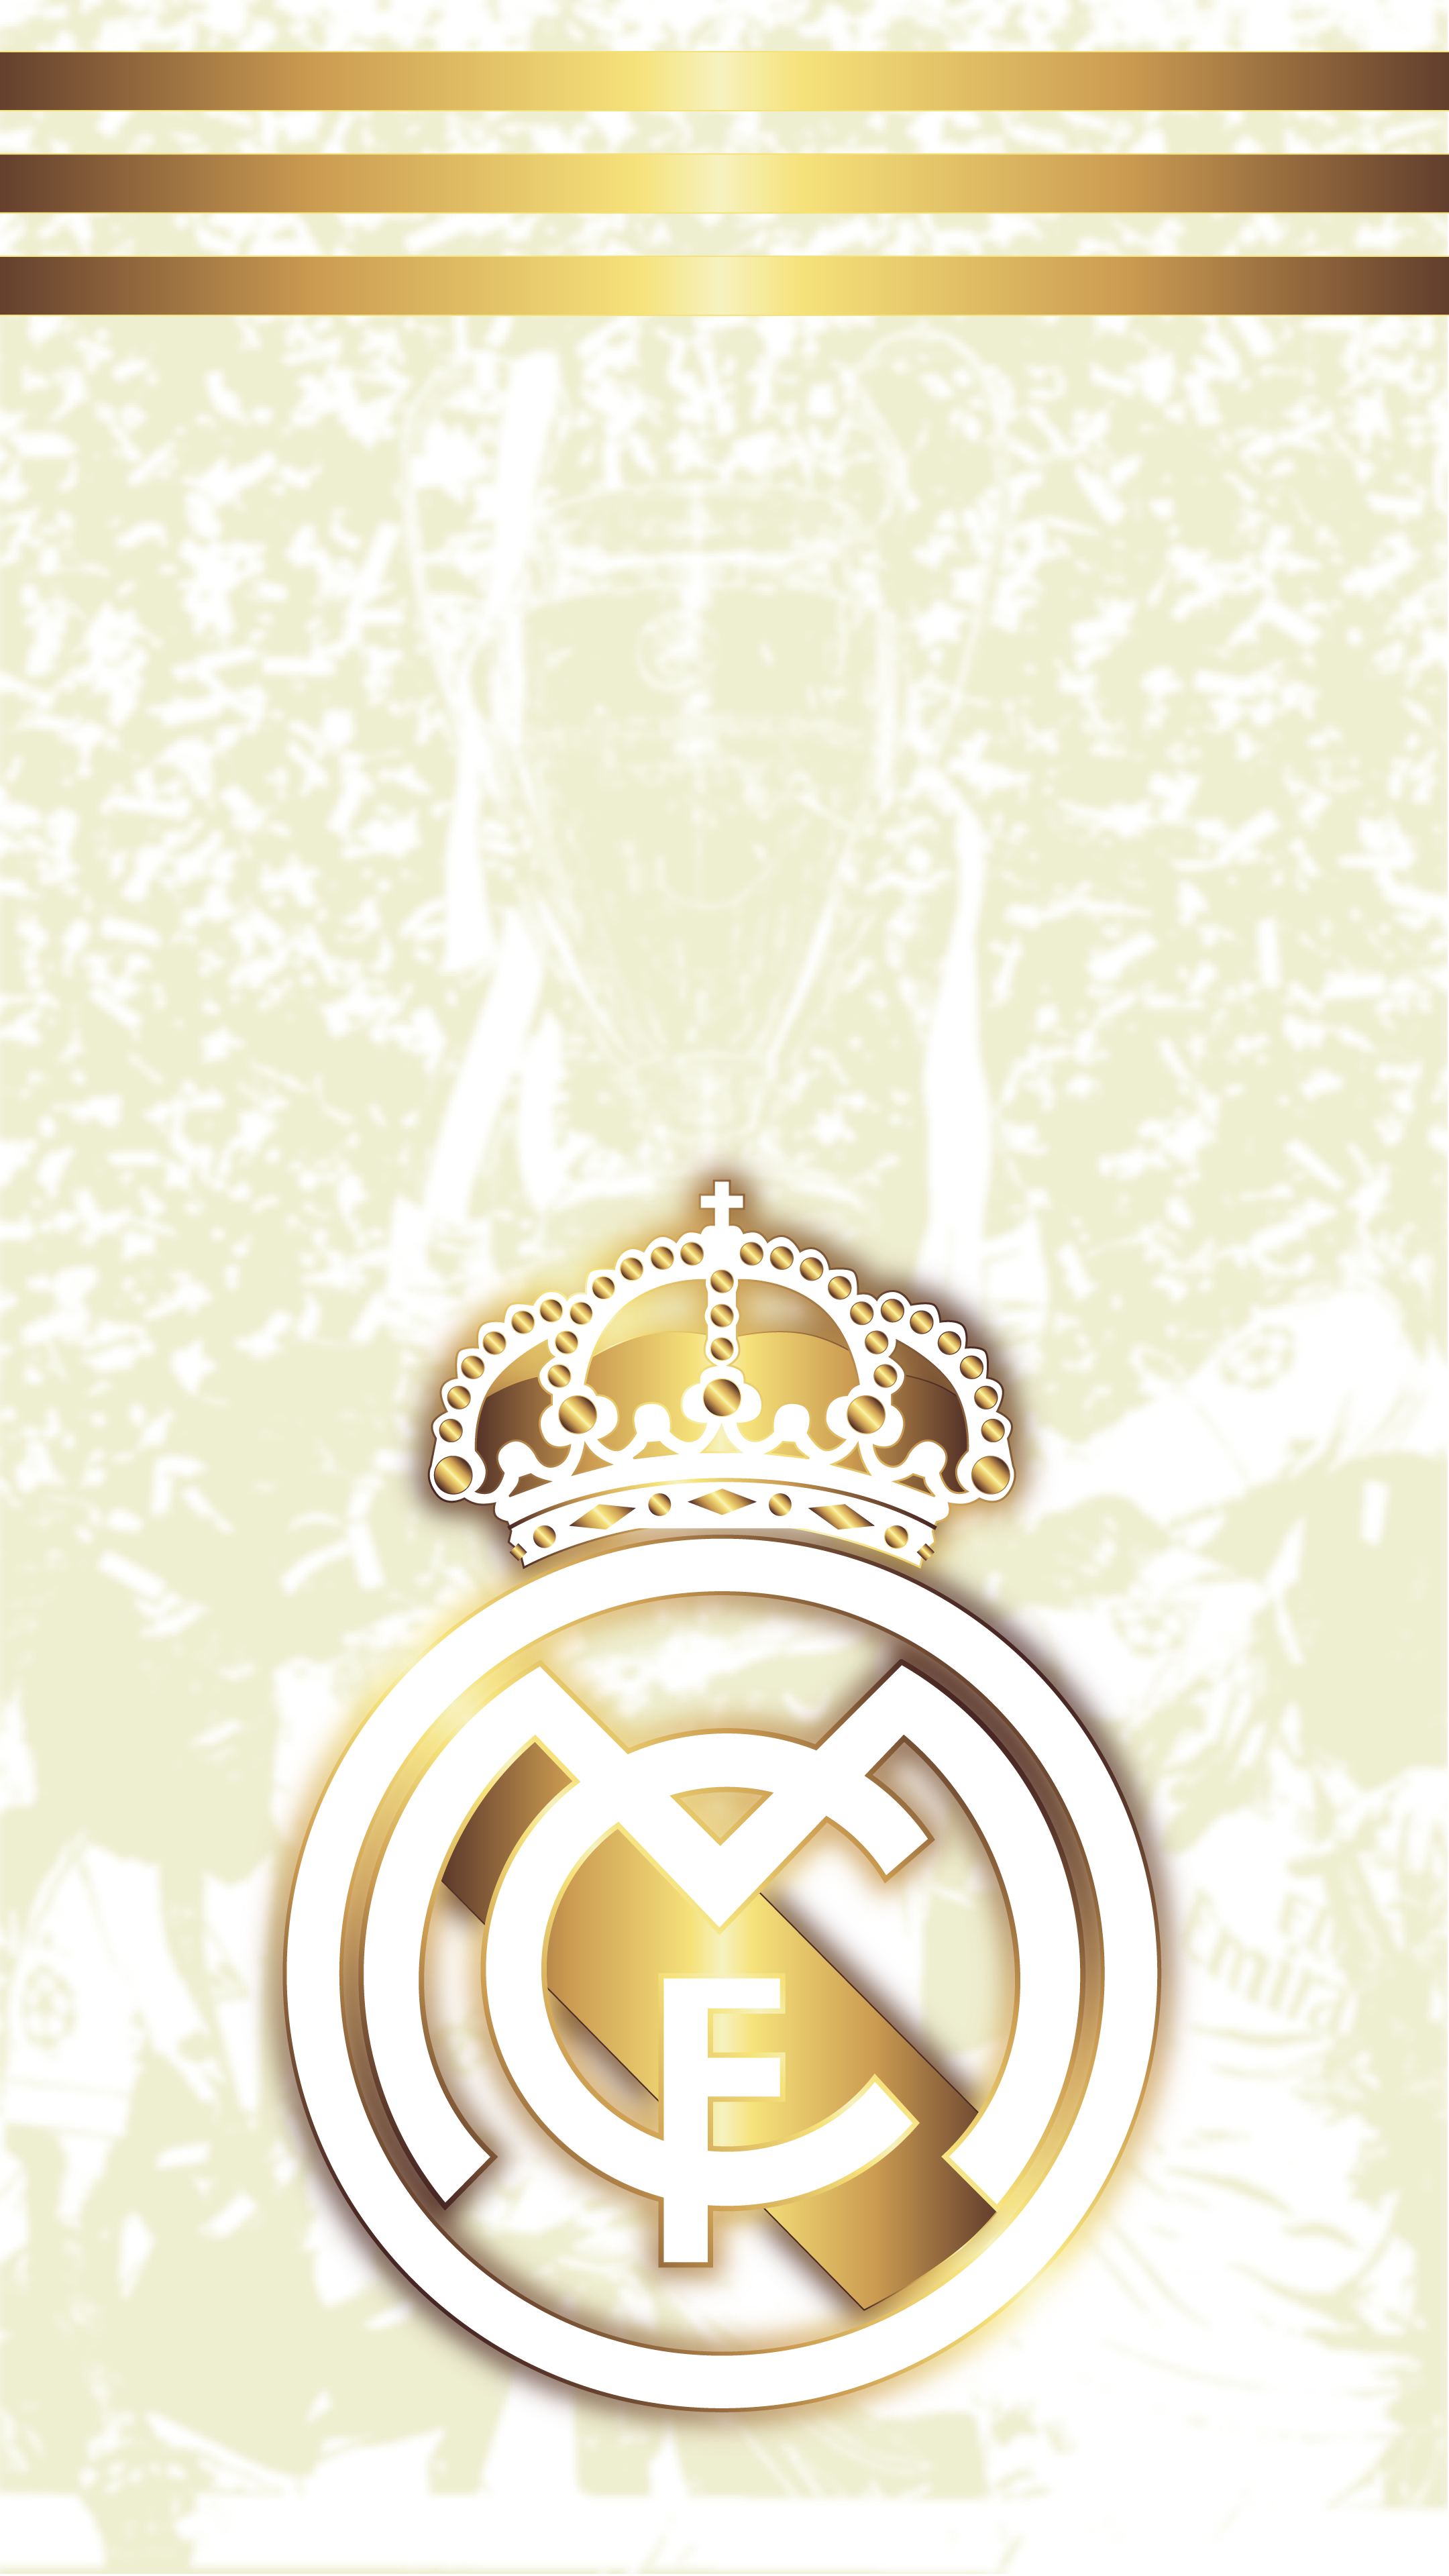 Real Madrid Wallpaper 2019. Sports. Real madrid wallpaper, Madrid wallpaper, Real madrid logo wallpaper